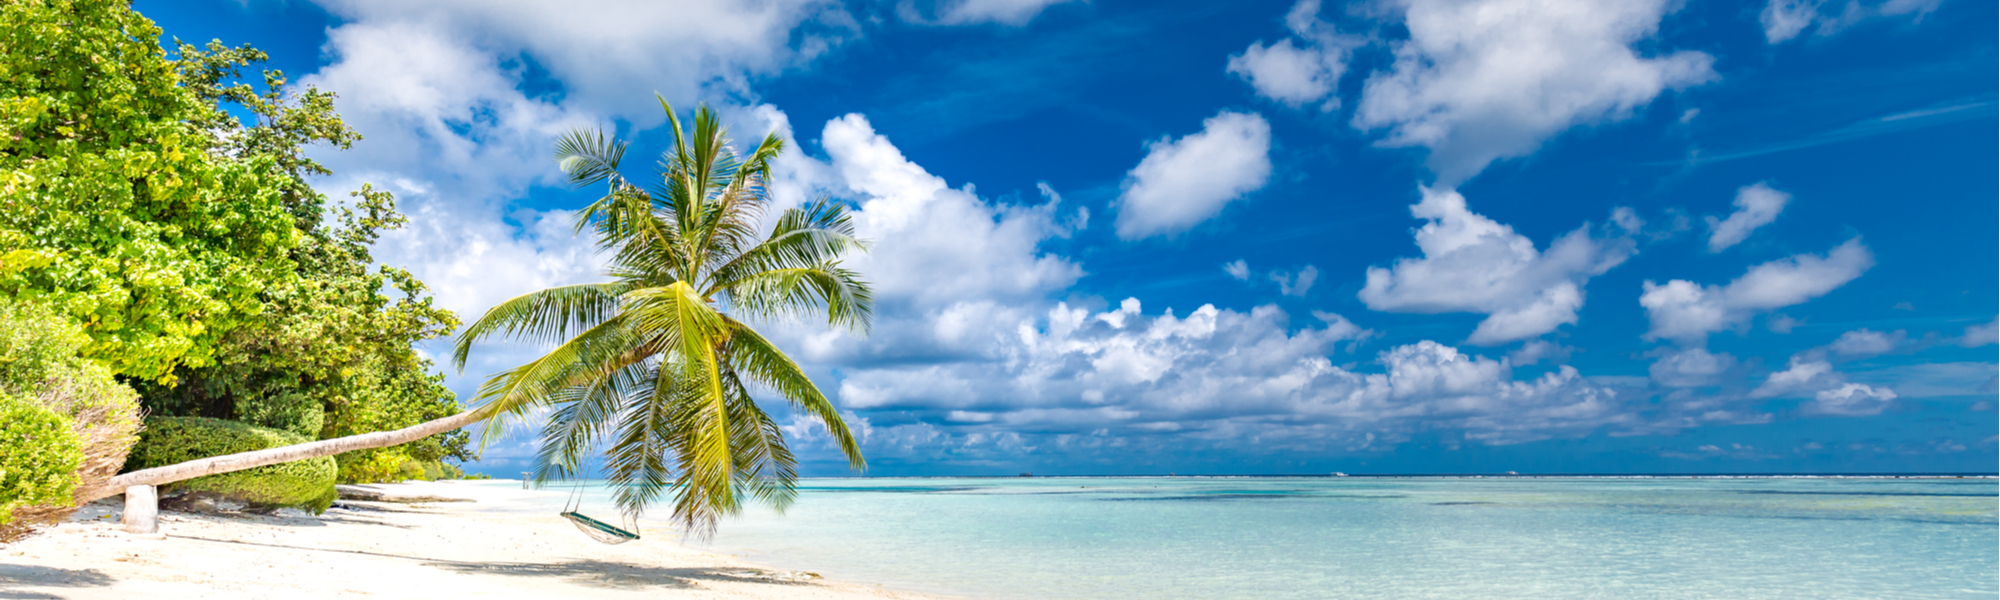 Fiji Tropical Beach